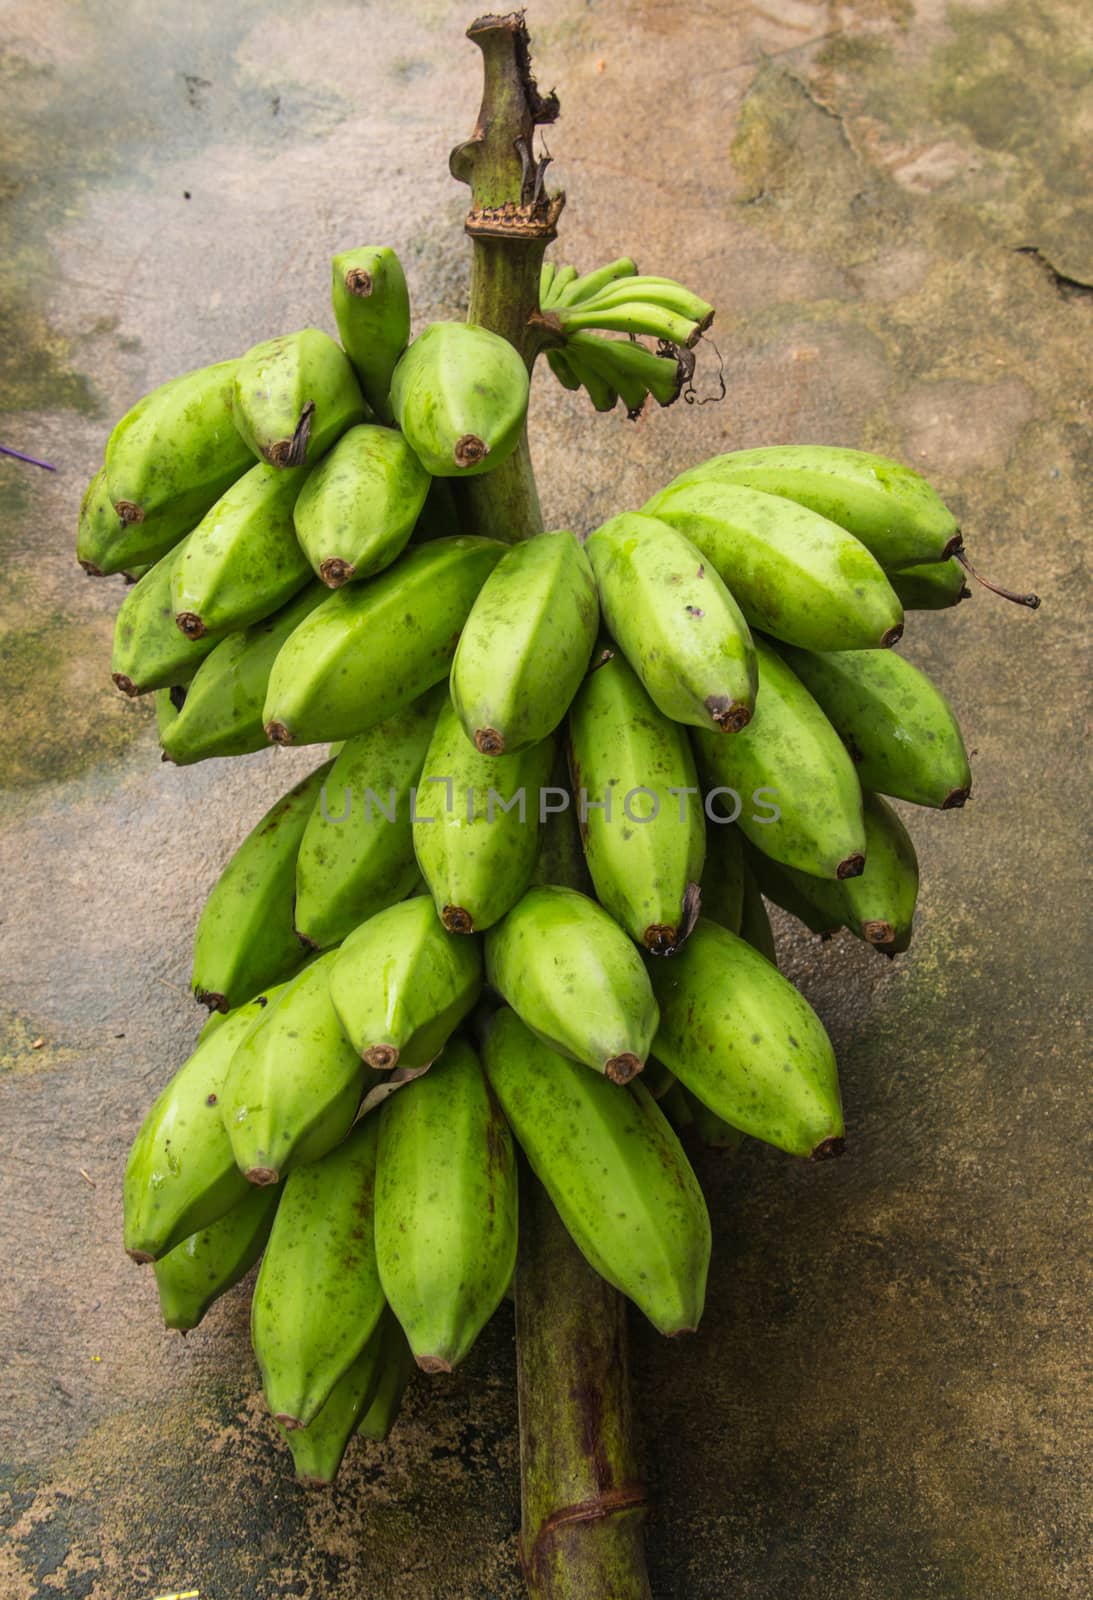 Bunch of fresh green bananas by peerapixs